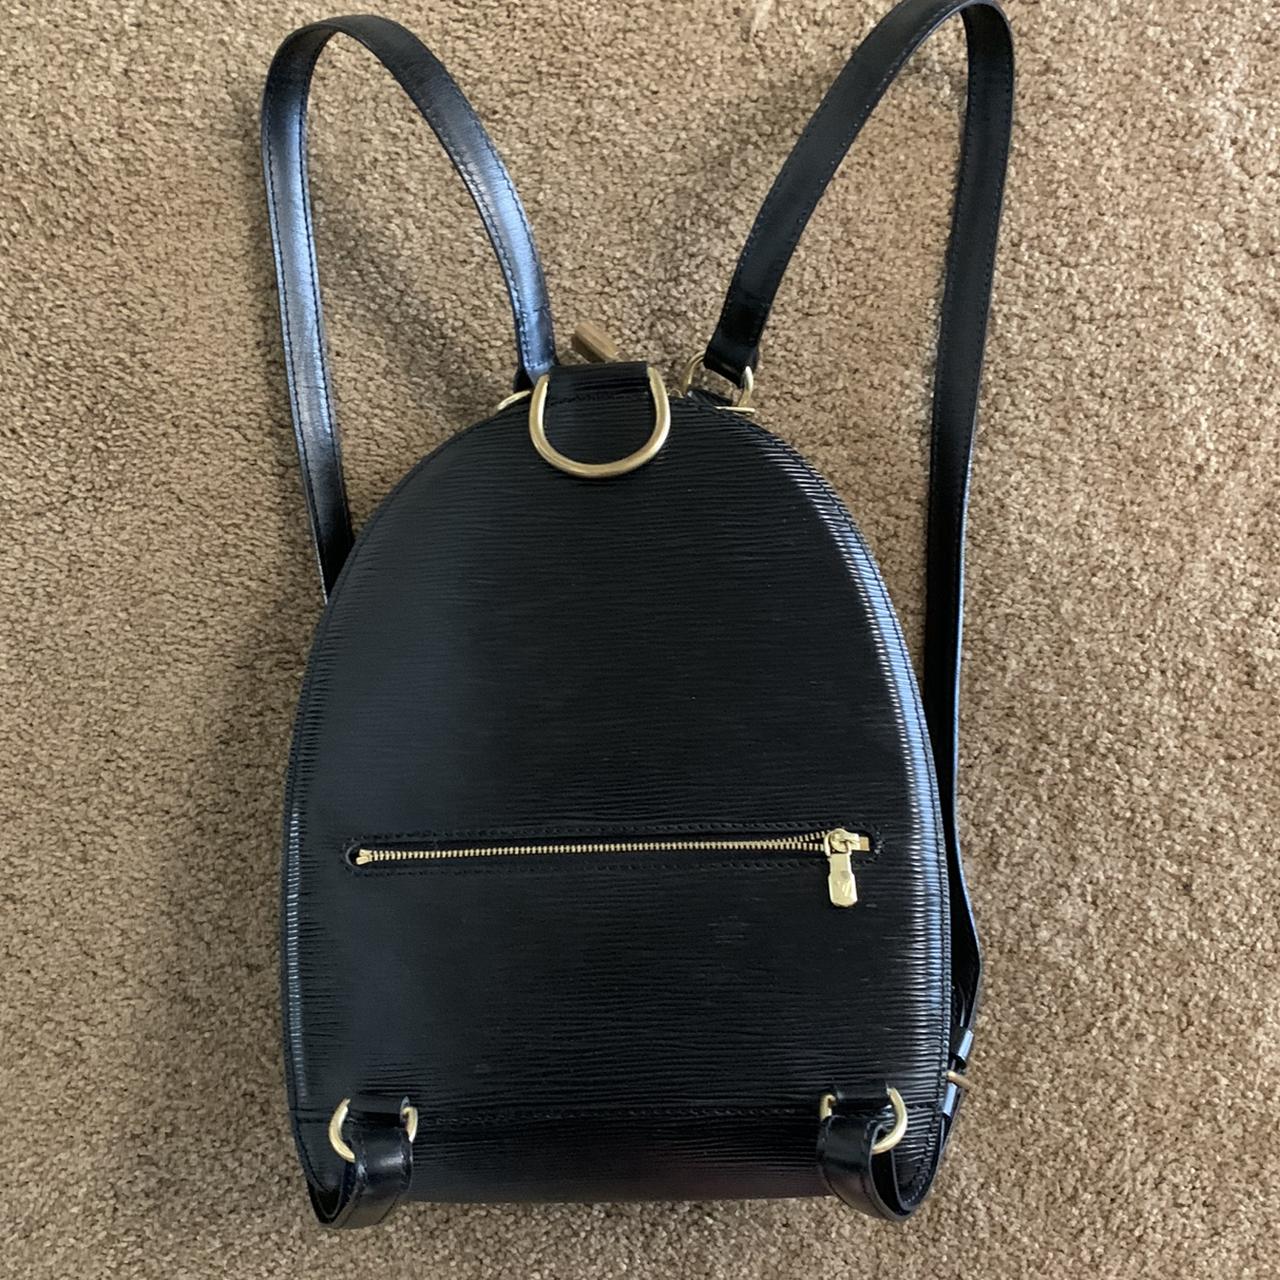 Authentic Louis Vuitton Rare Black Epi Leather Mabillon Backpack